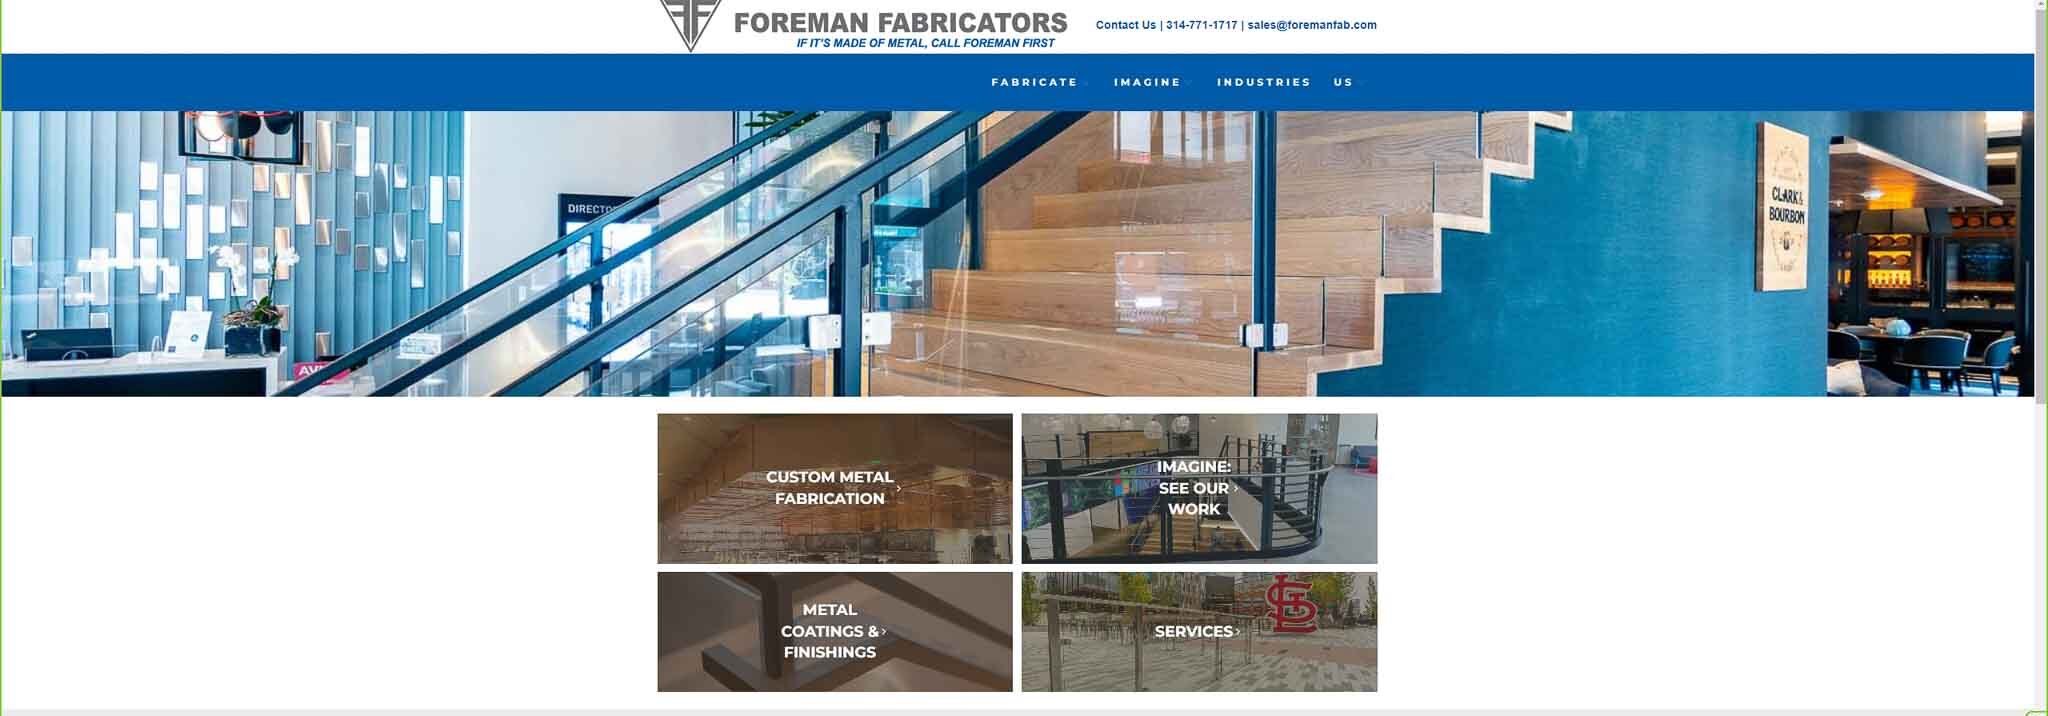 foreman fabricators website